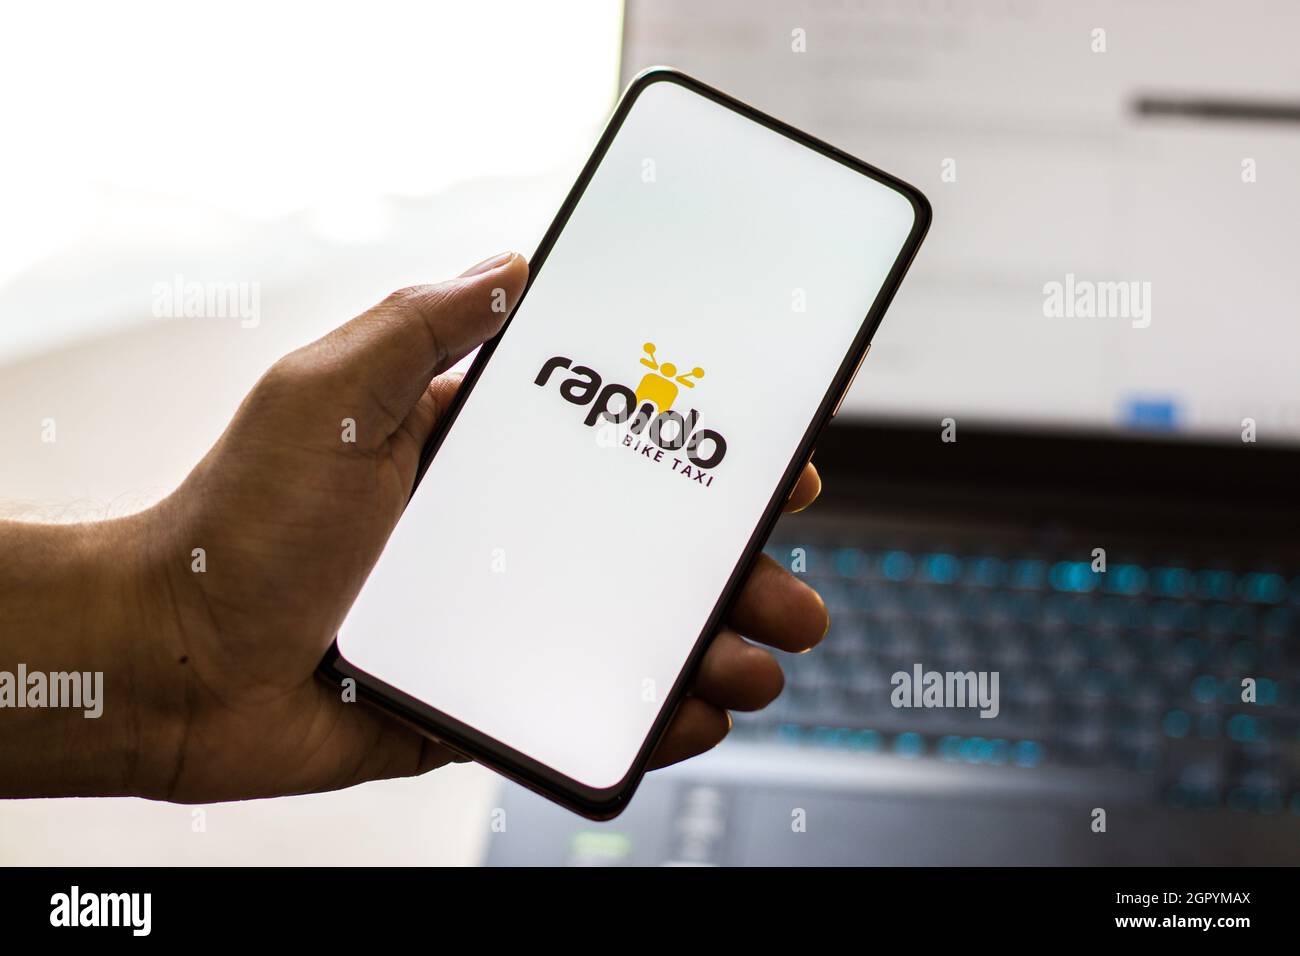 West Bangal, India - September 28, 2021 : Rapido logo on phone screen stock image. Stock Photo